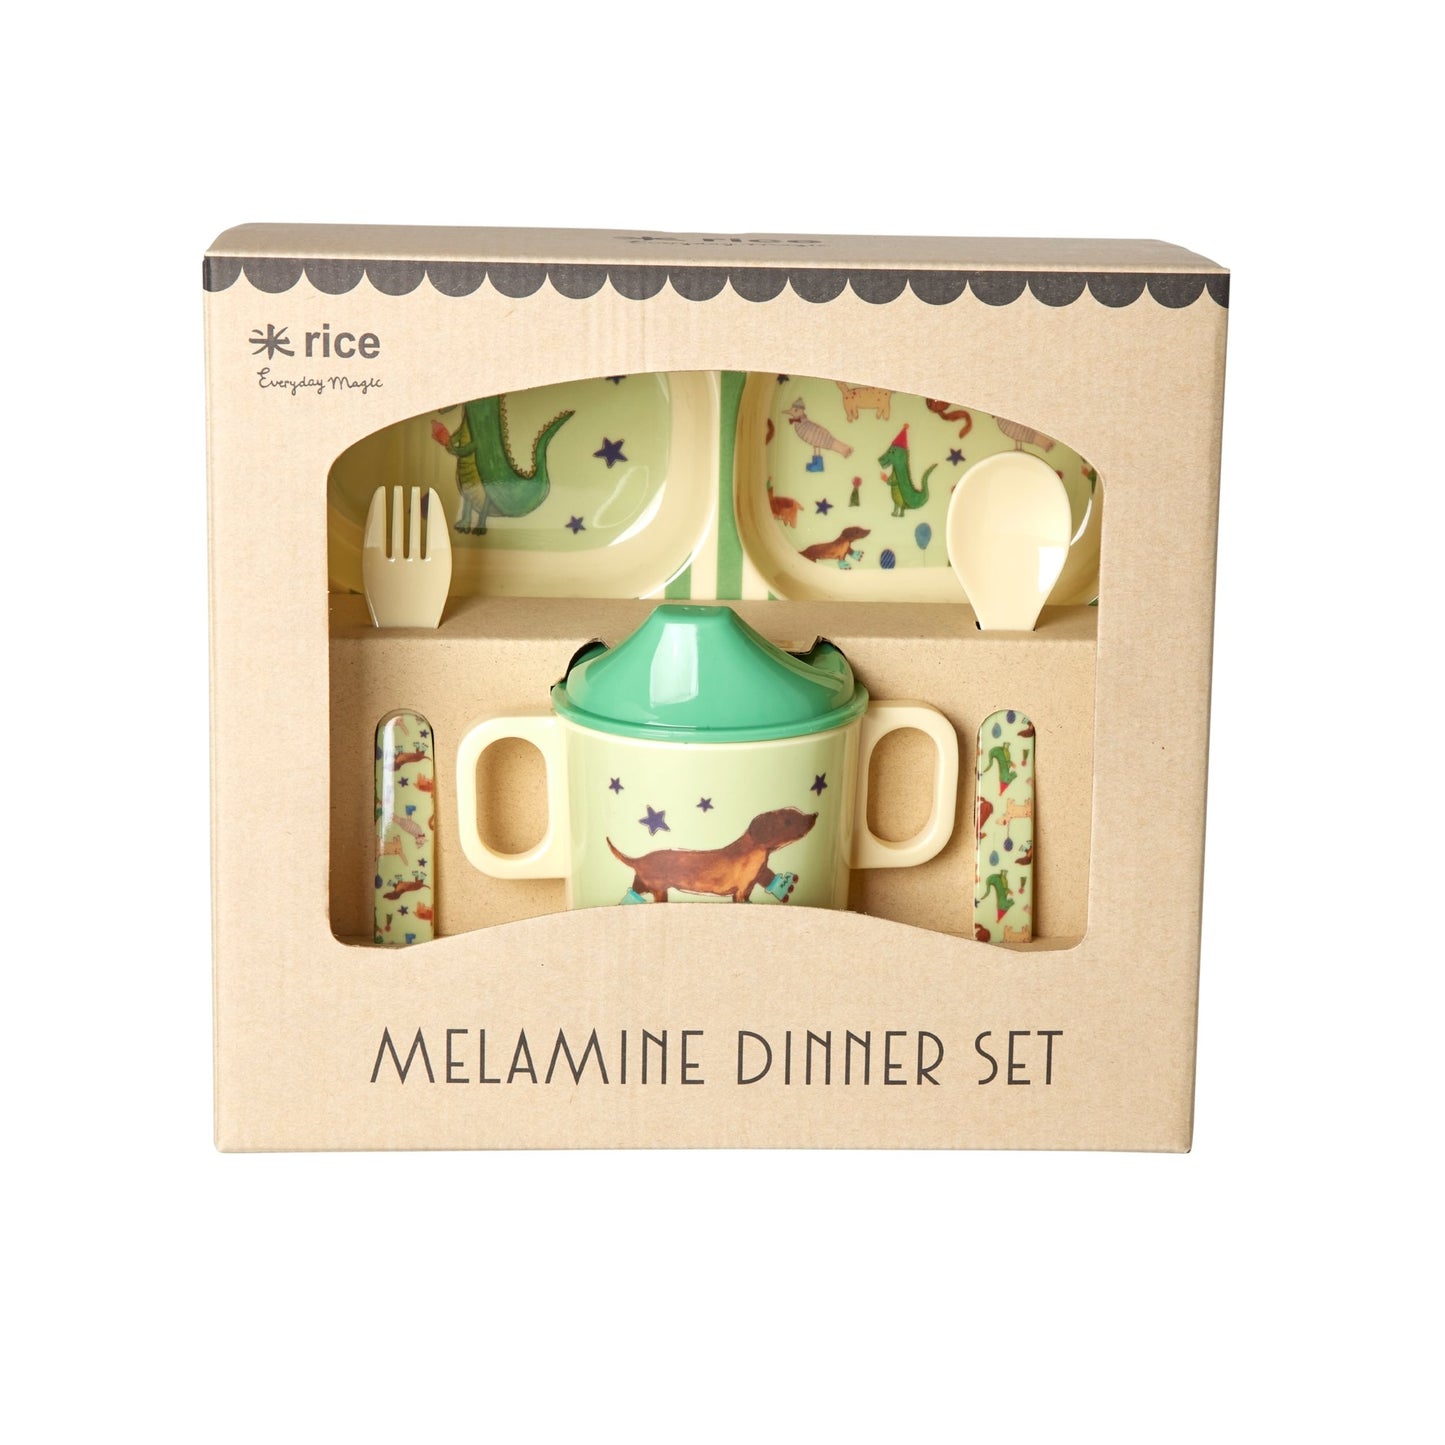 Melamine Baby Dinner Set in Gift Box - Animal Green Print - 4 piece Set